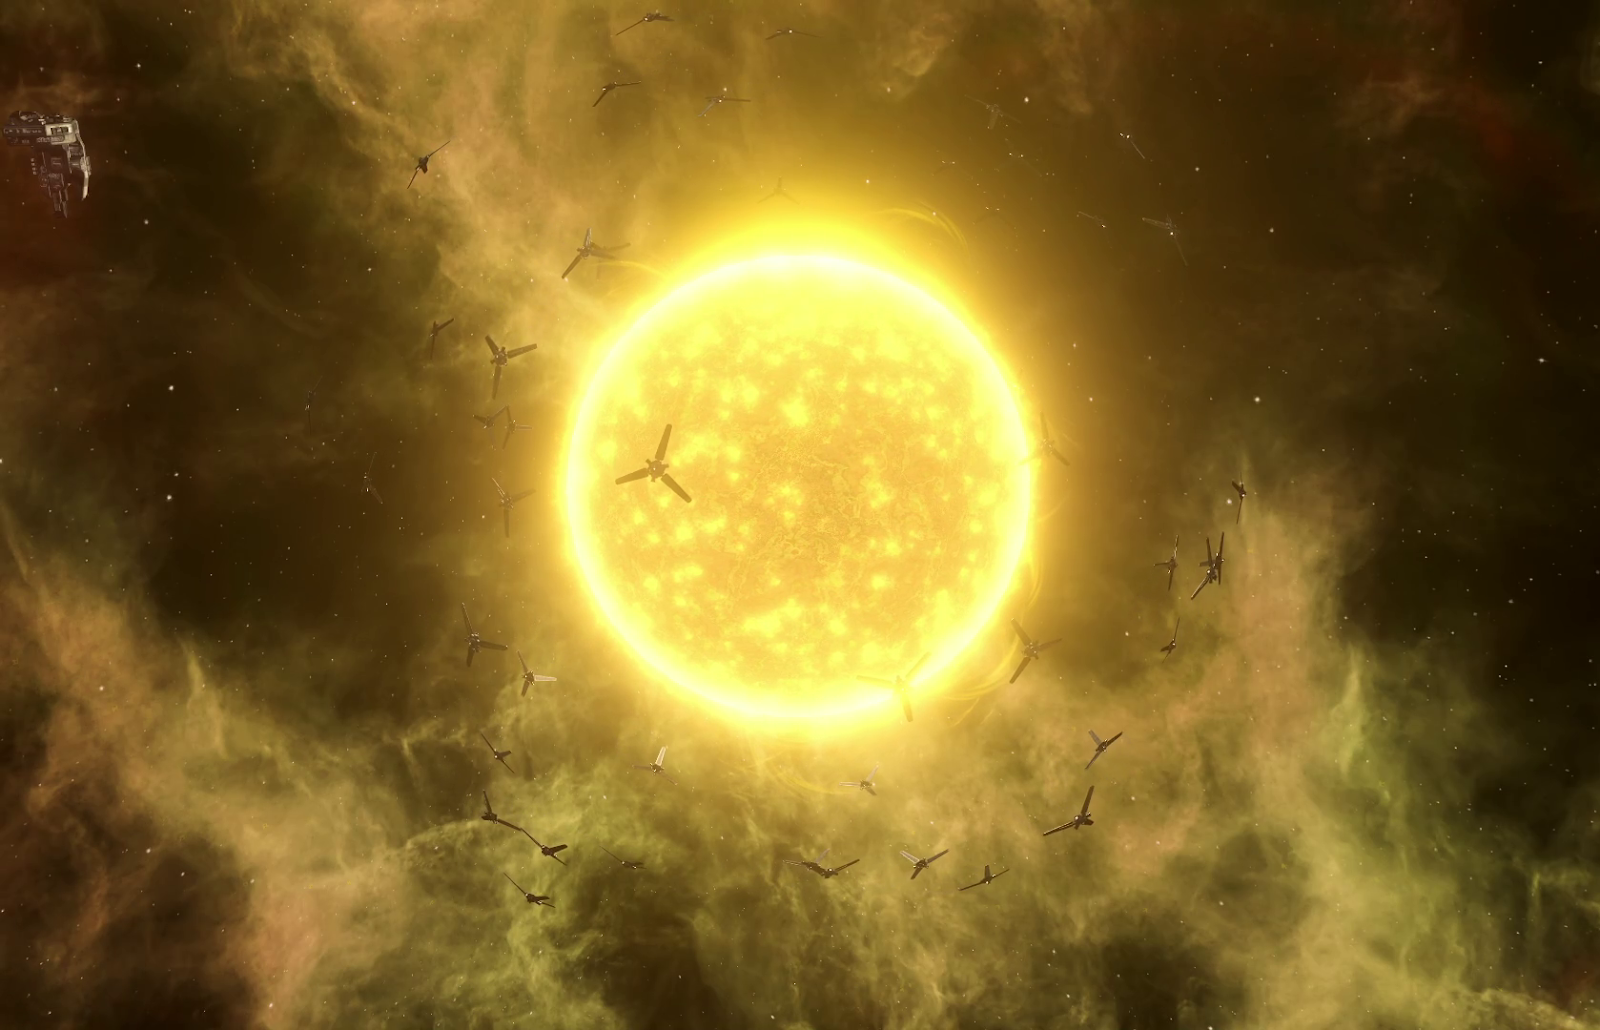 Stellaris The Machine Age introduces the Dyson Swarm